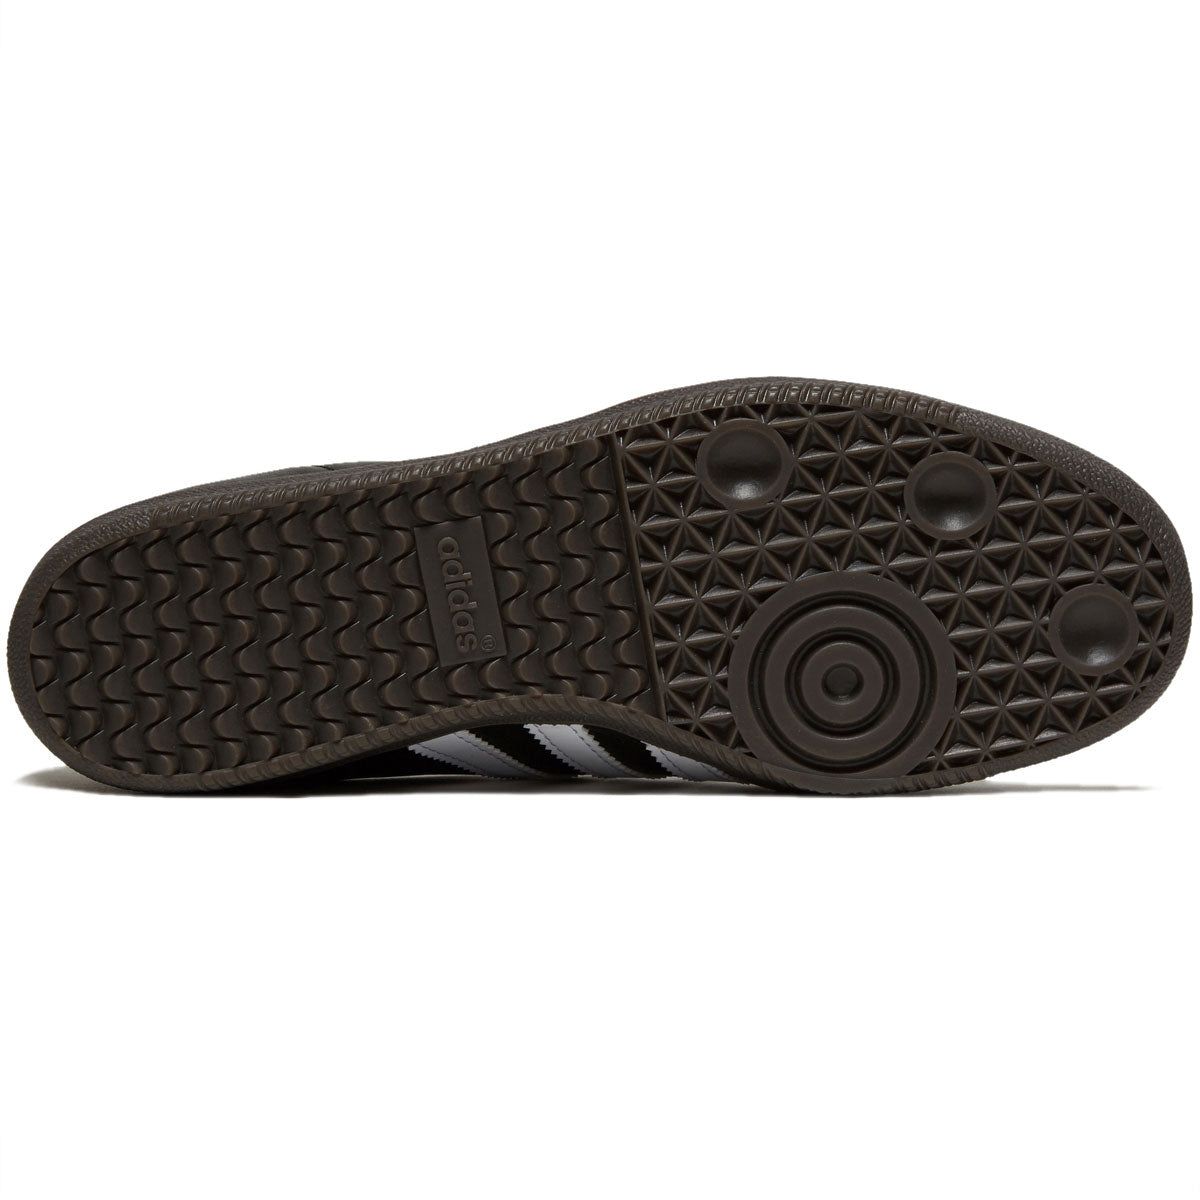 Adidas Samba ADV Shoes - New Black/White/Gum image 4